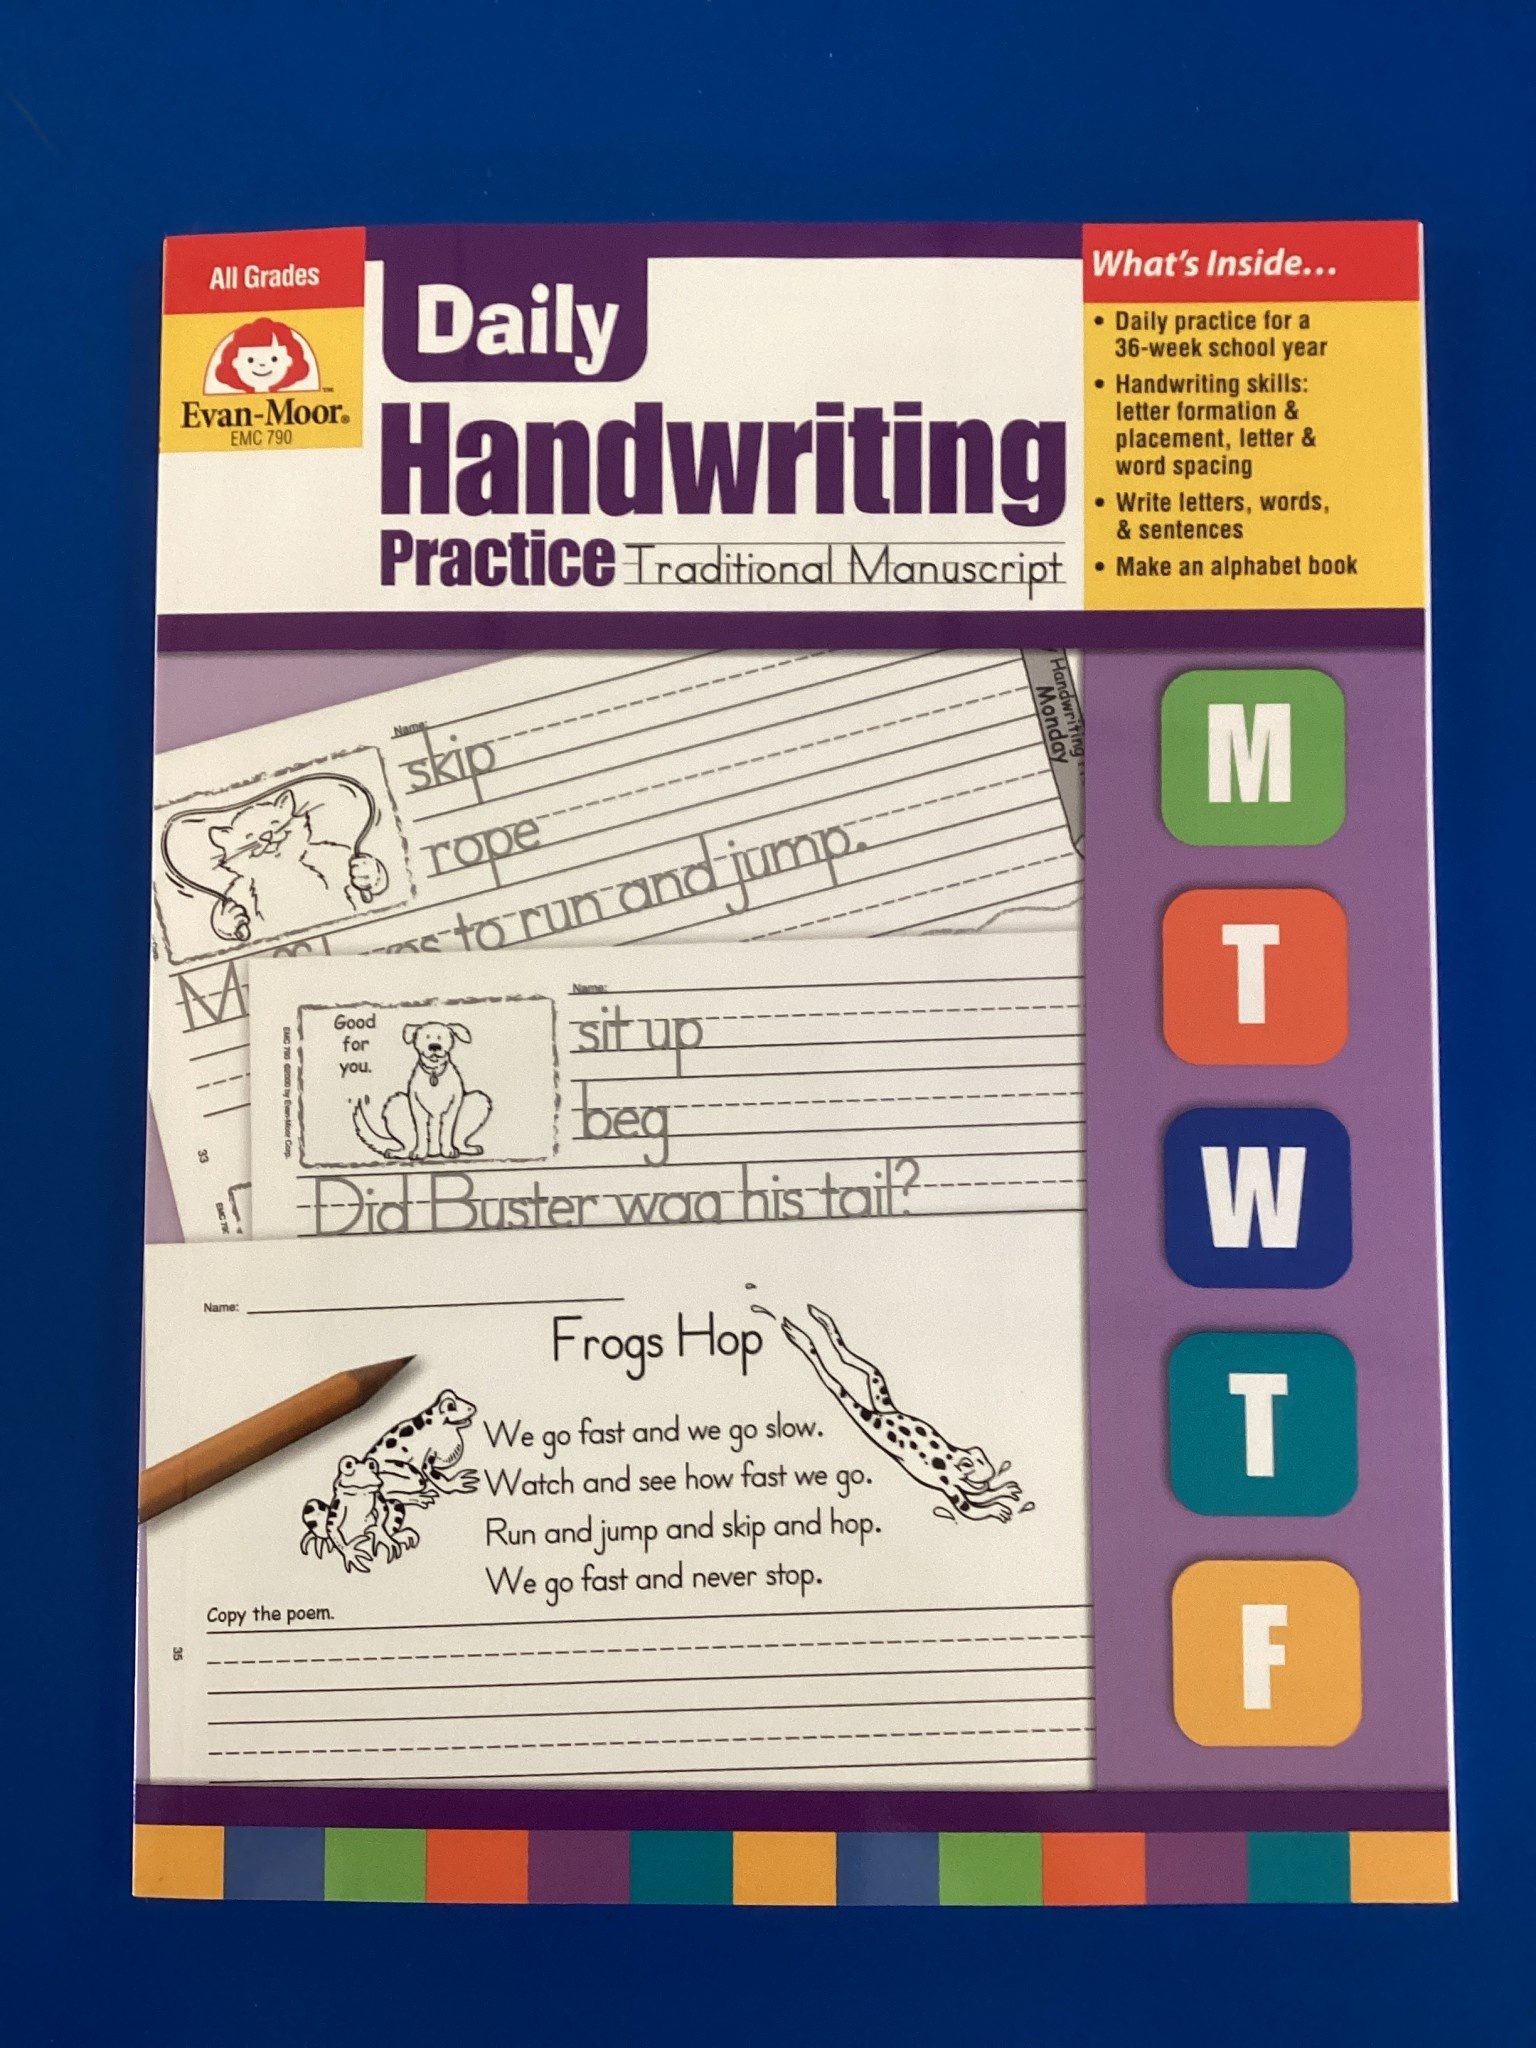 Daily Handwriting Practice Manuscript - School Spot